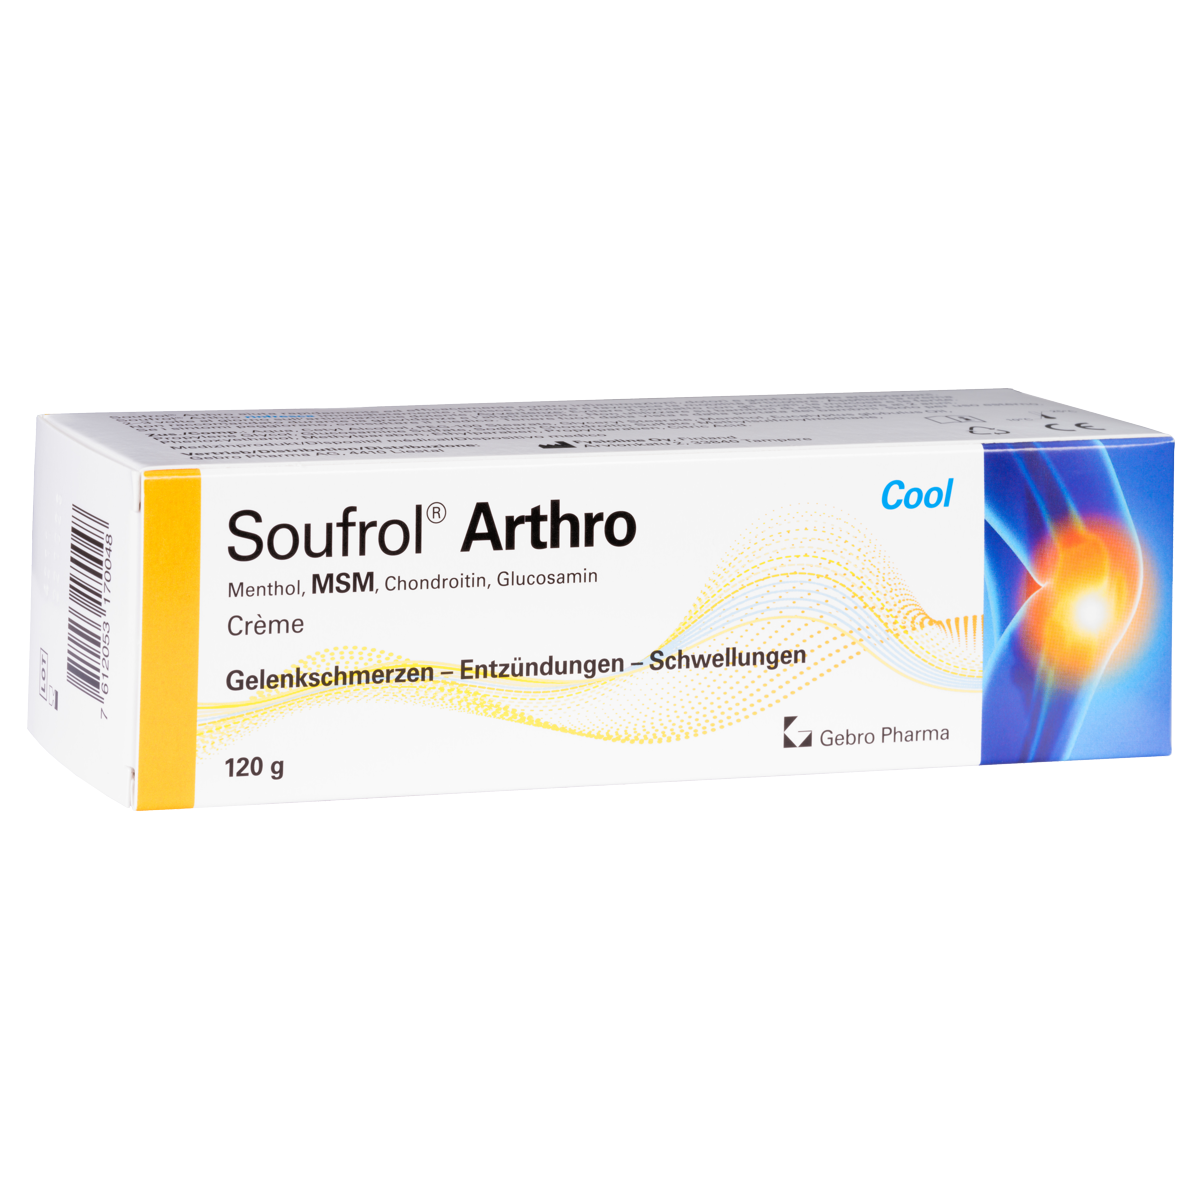 Soufrol Arthro Crème mit Menthol. MSM, Chondroitin und Glucosamin